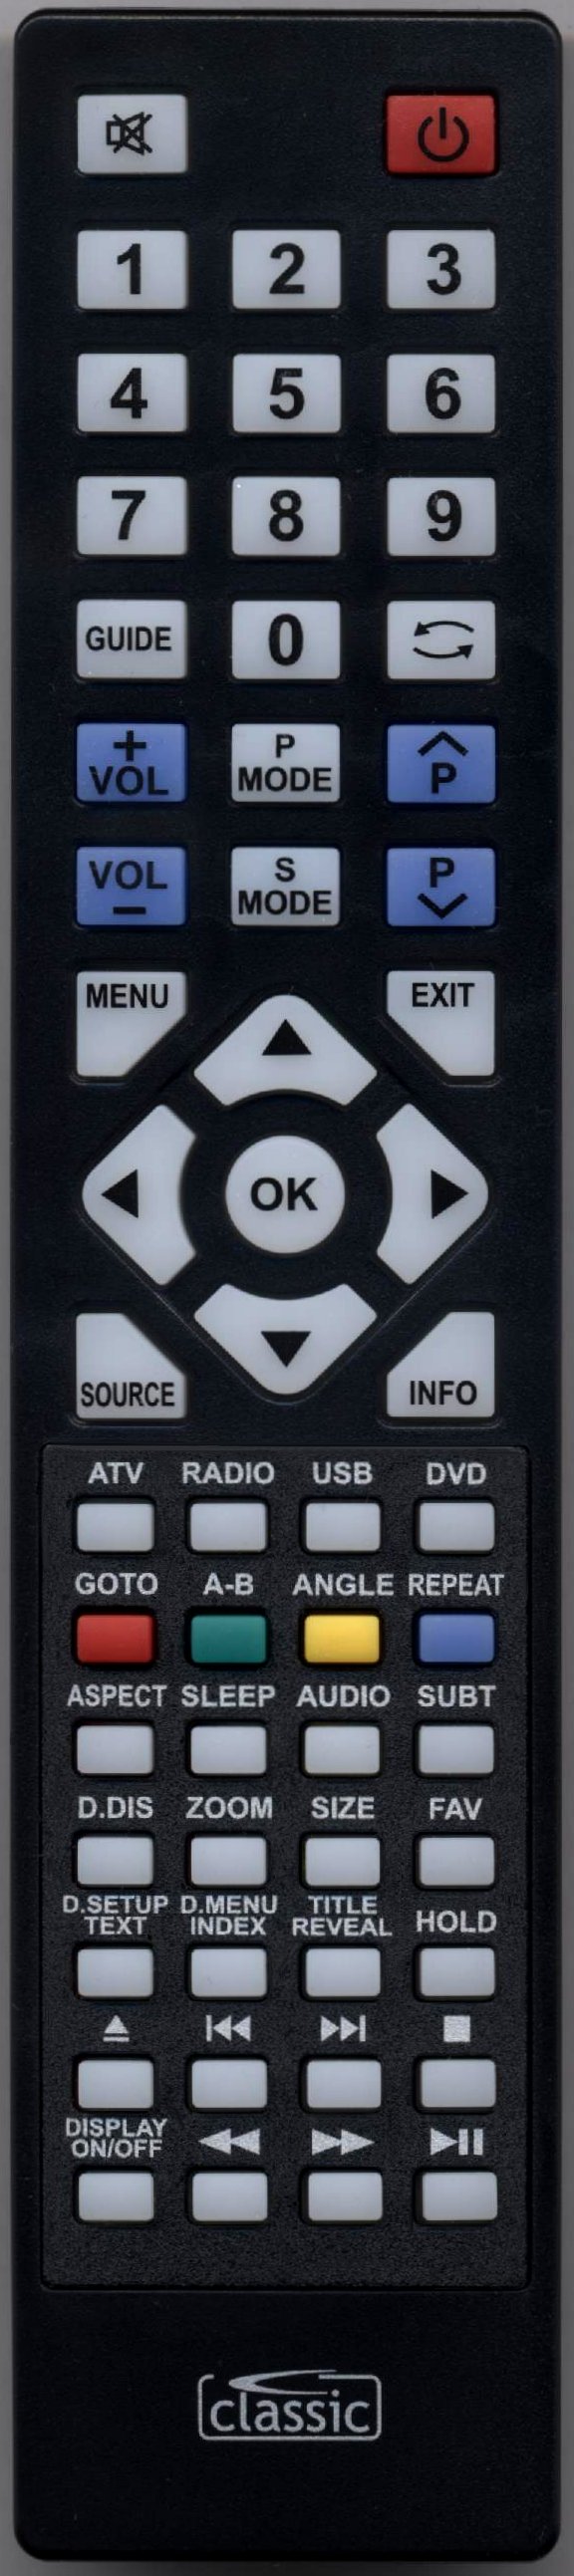 UMC X26/56G-GB-TCDU-UK Remote Control Alternative